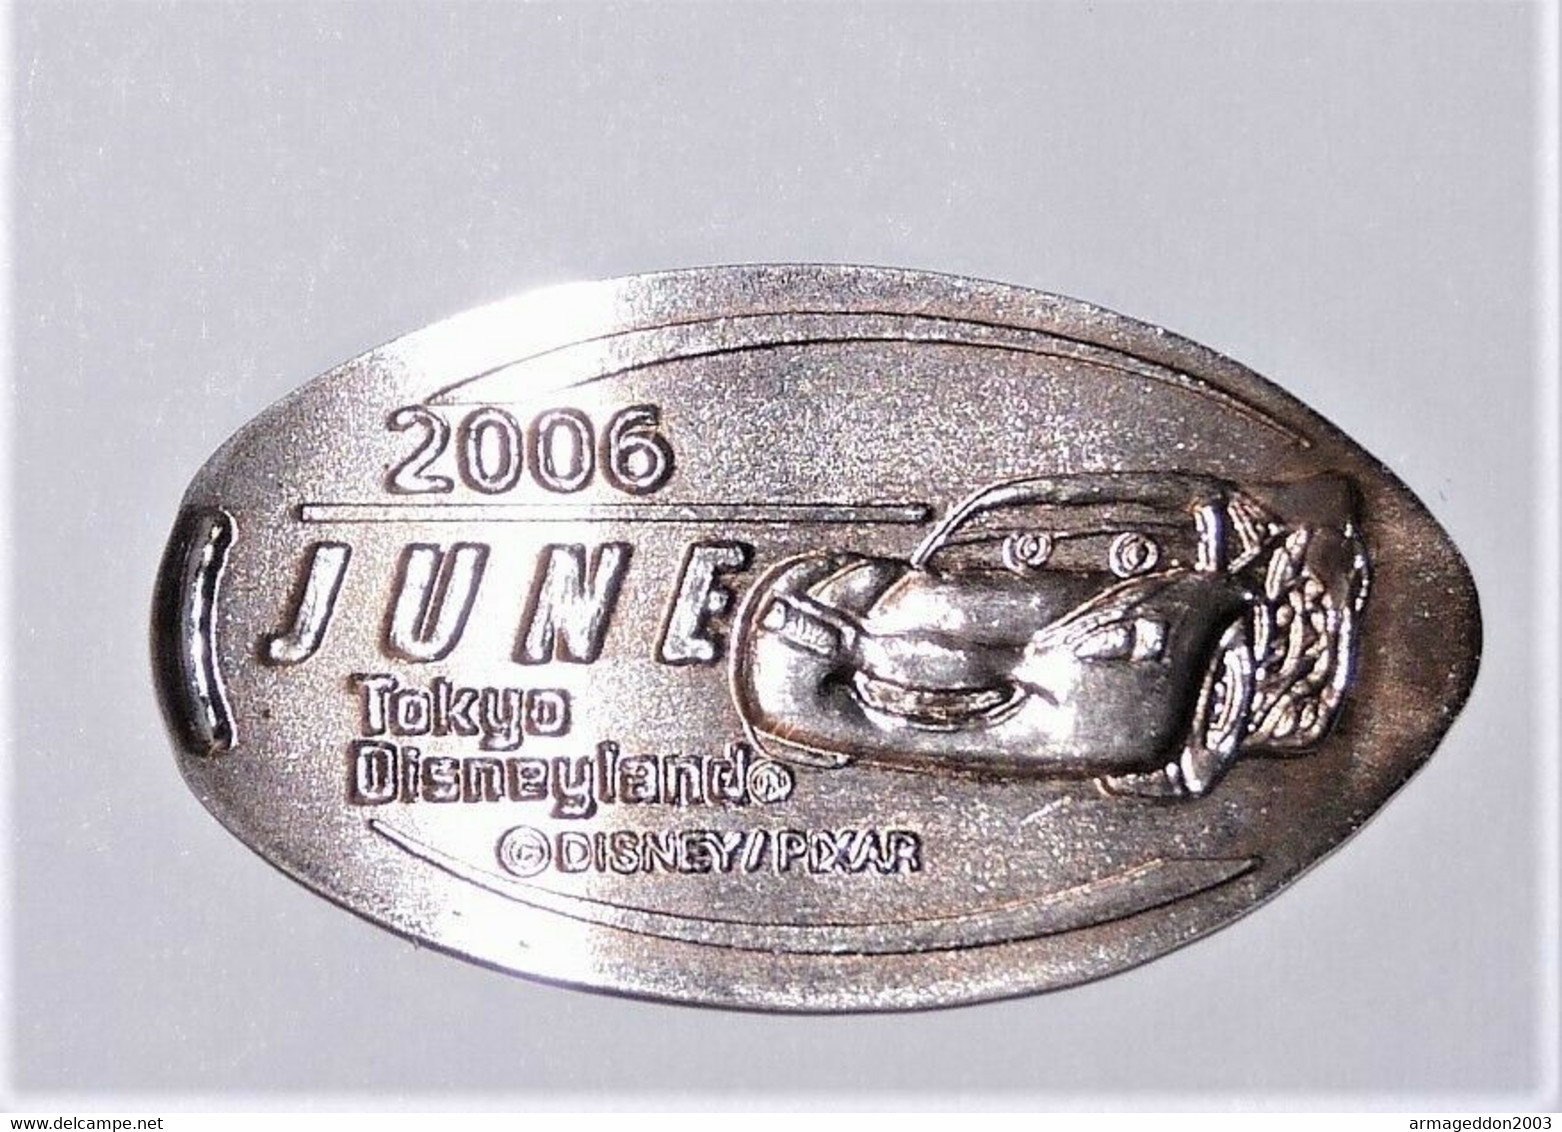 Pressed Coins Souvenir Medallion Médaillon Medaille Cars 2006 Pixar Disney - Elongated Coins